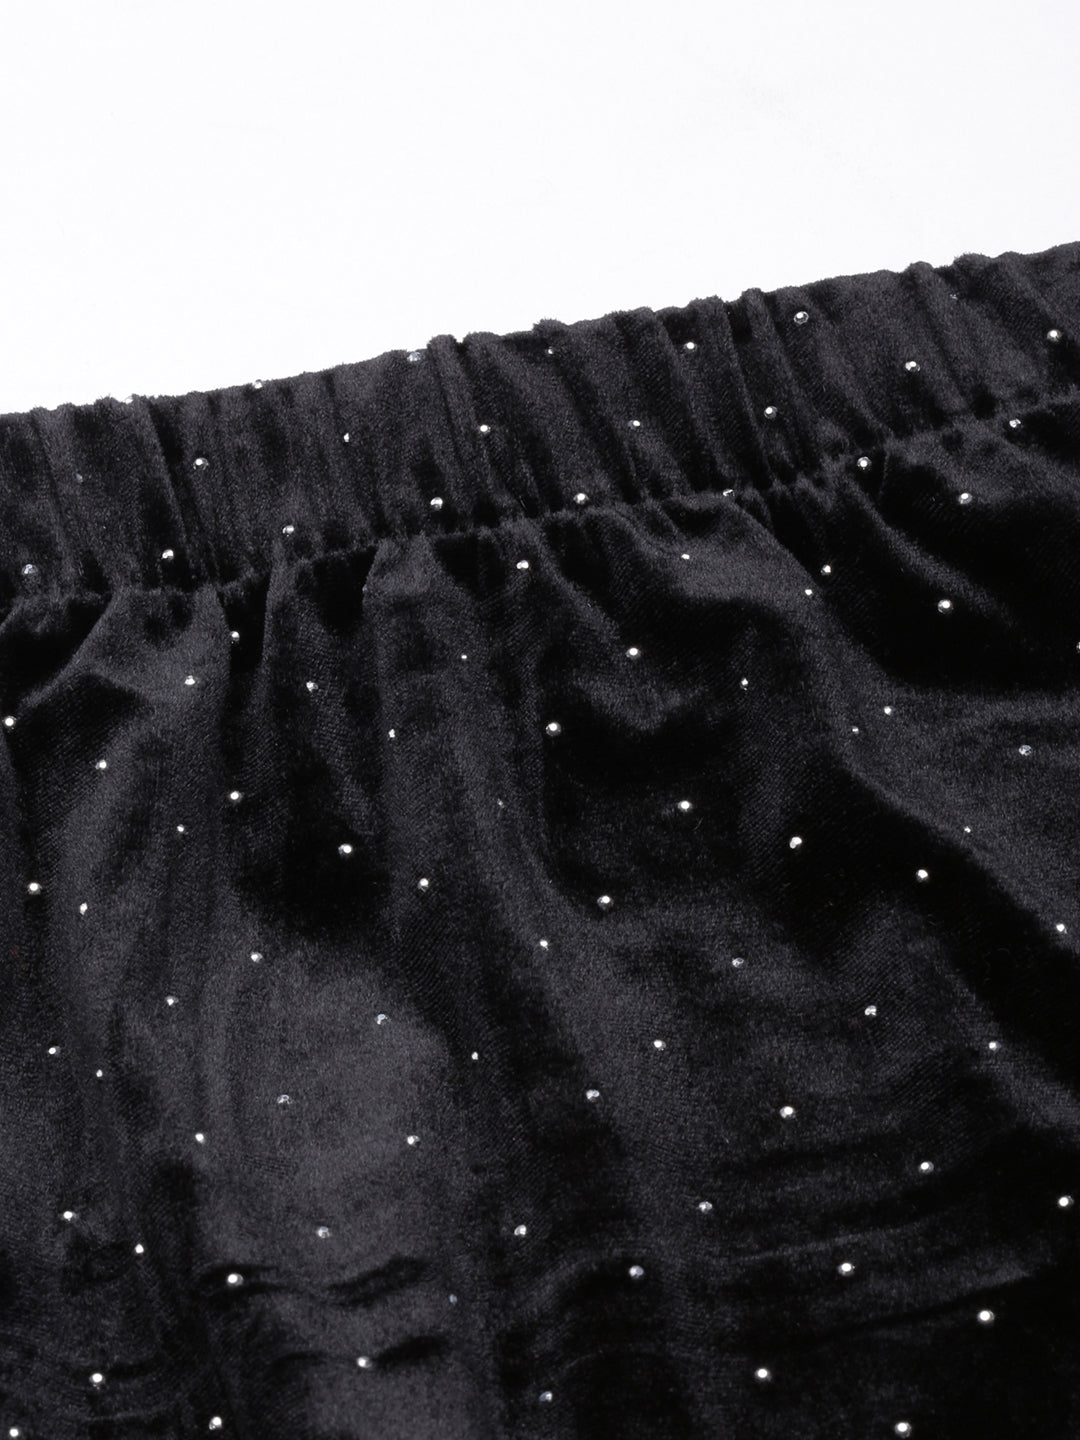 Women Solid Black A-Line Midi Skirt